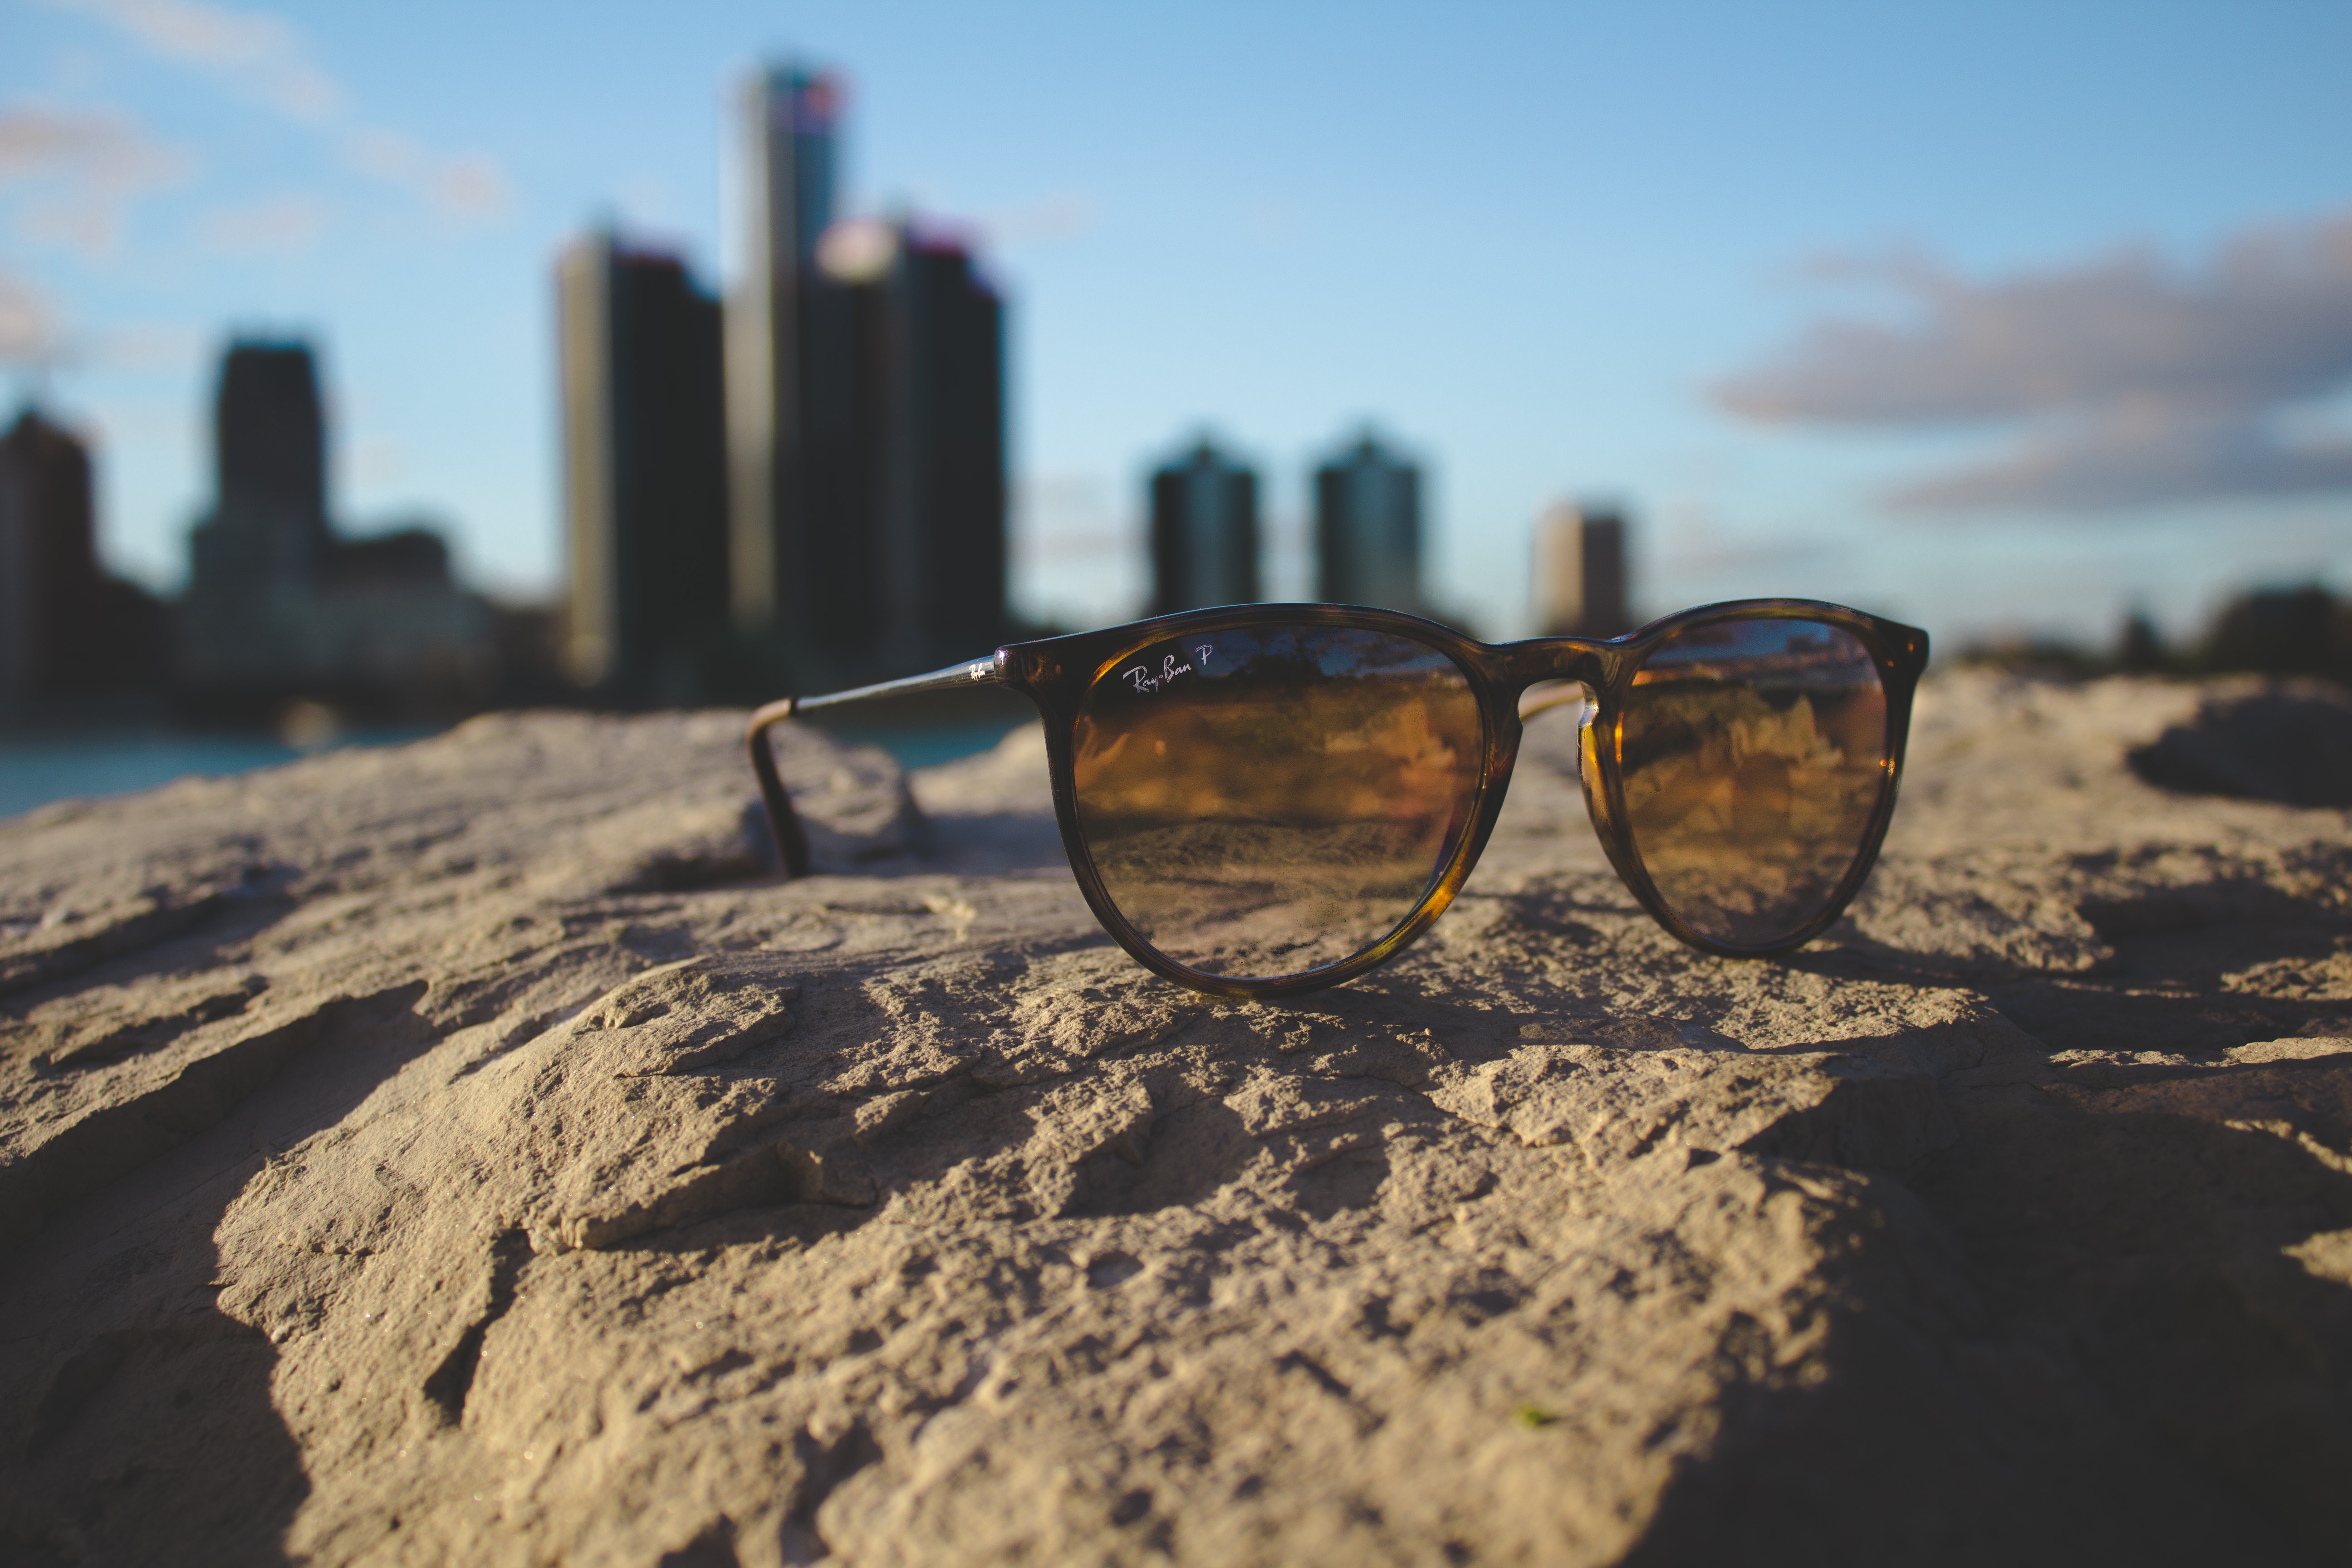 Free photo Sunglasses on a rock